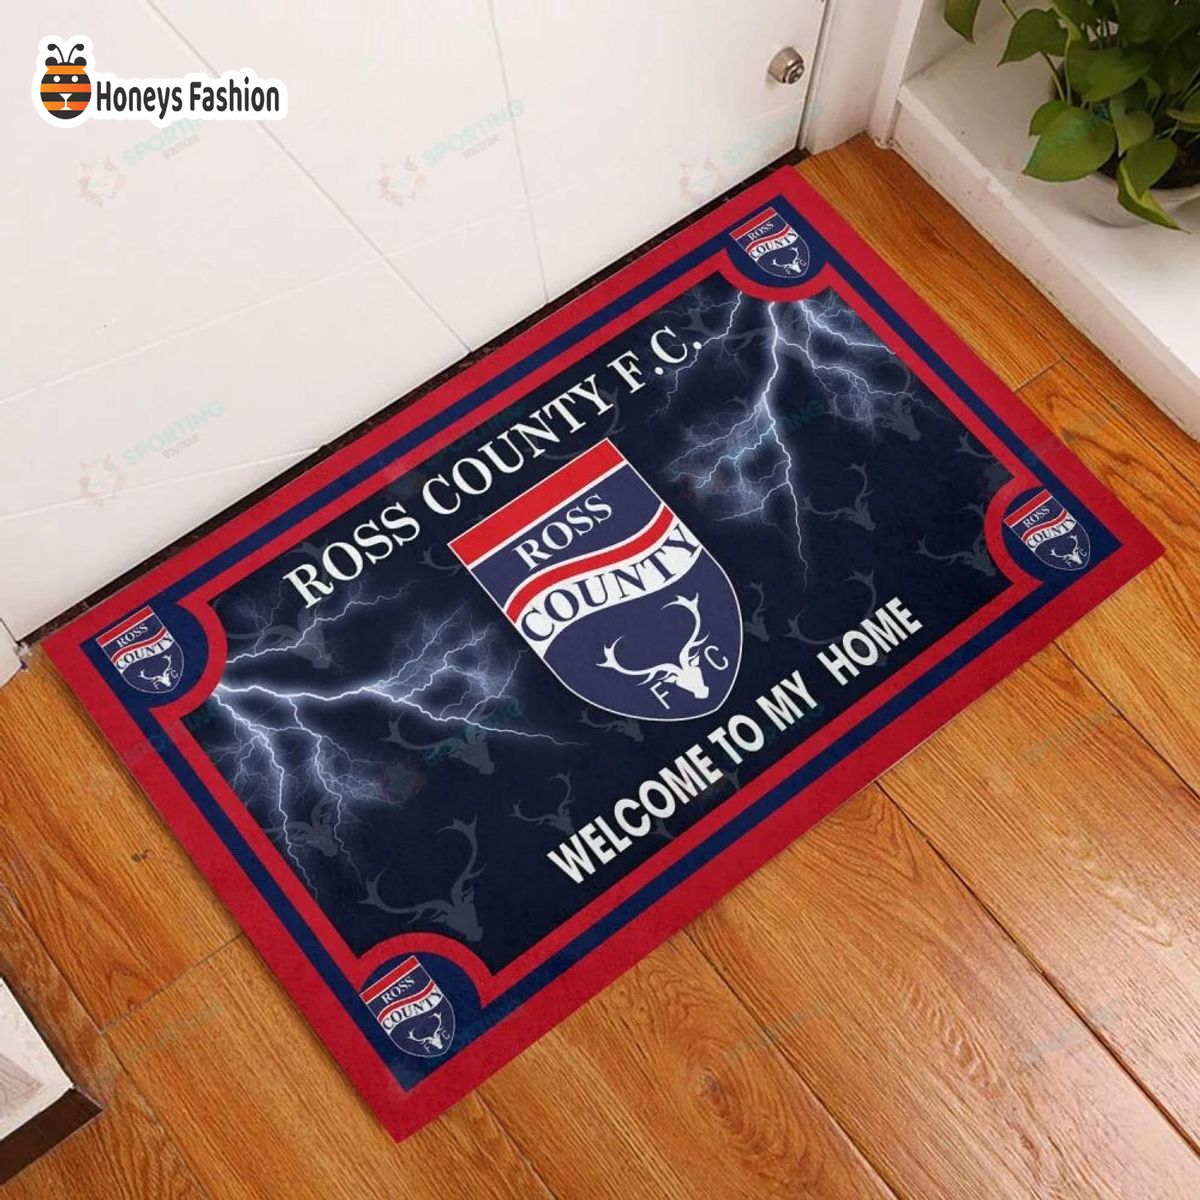 Ross County welcome to my home doormat